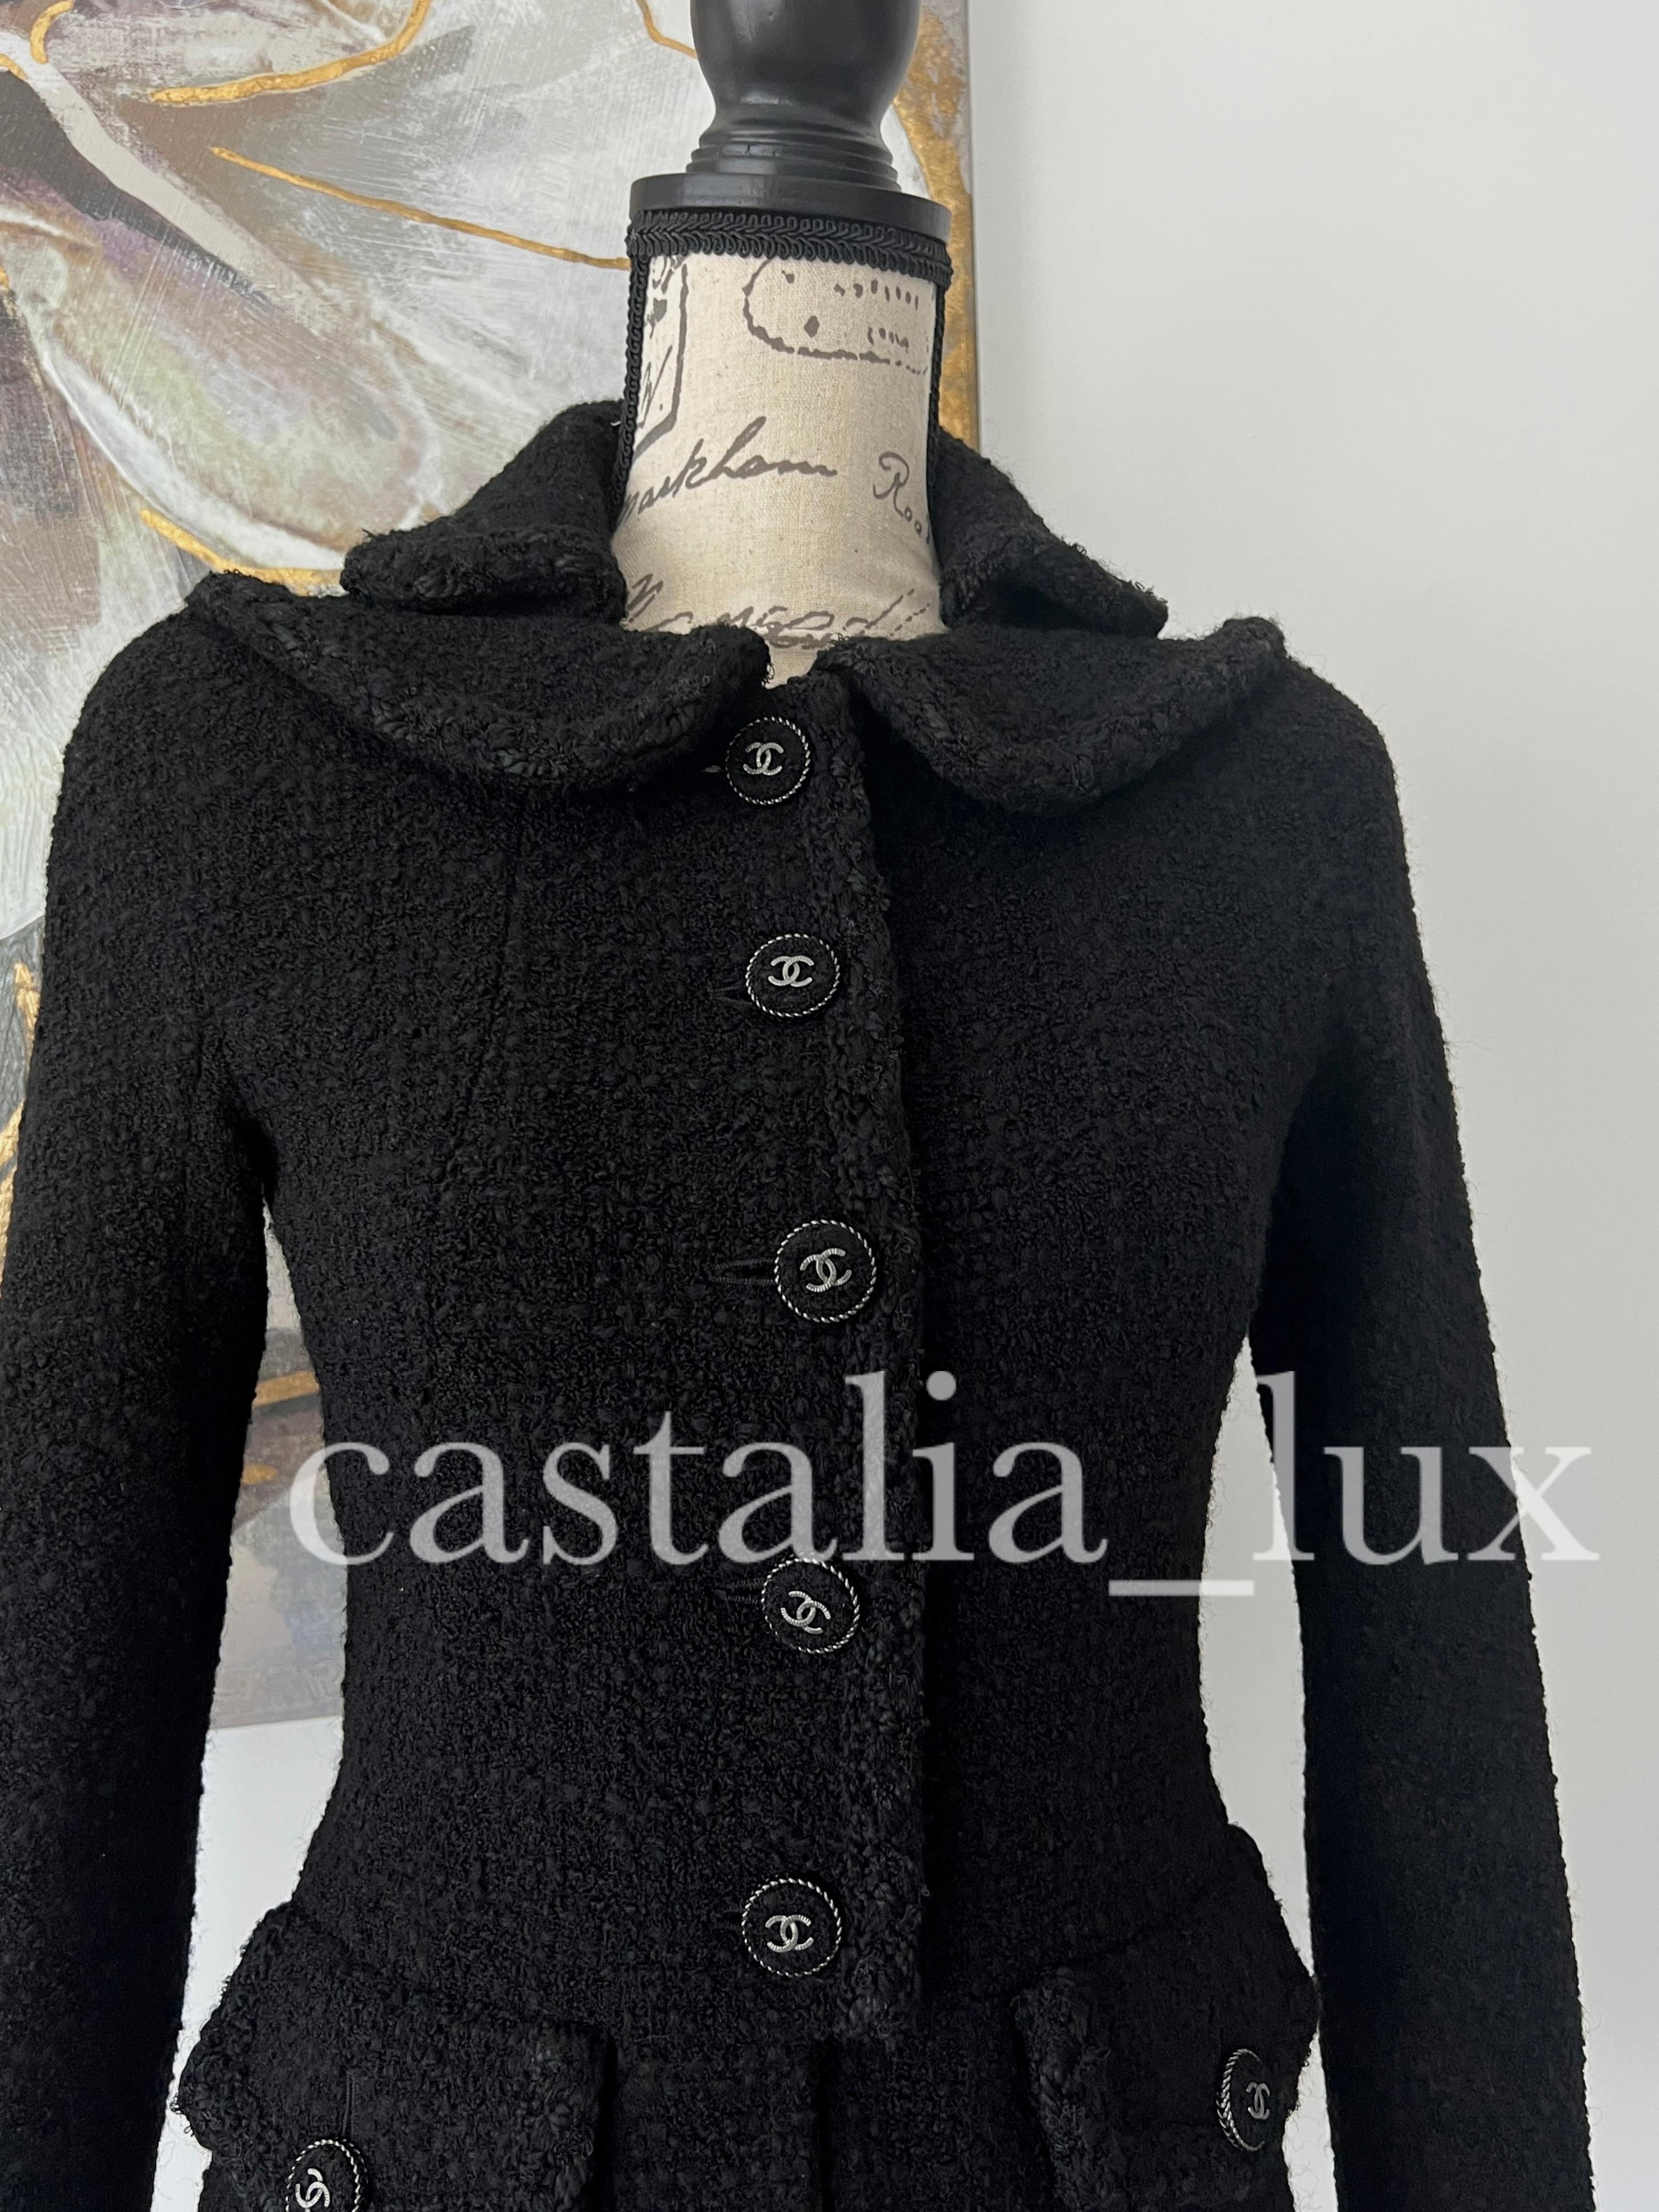 Chanel Statement CC Buttons Black Tweed Jacket 1